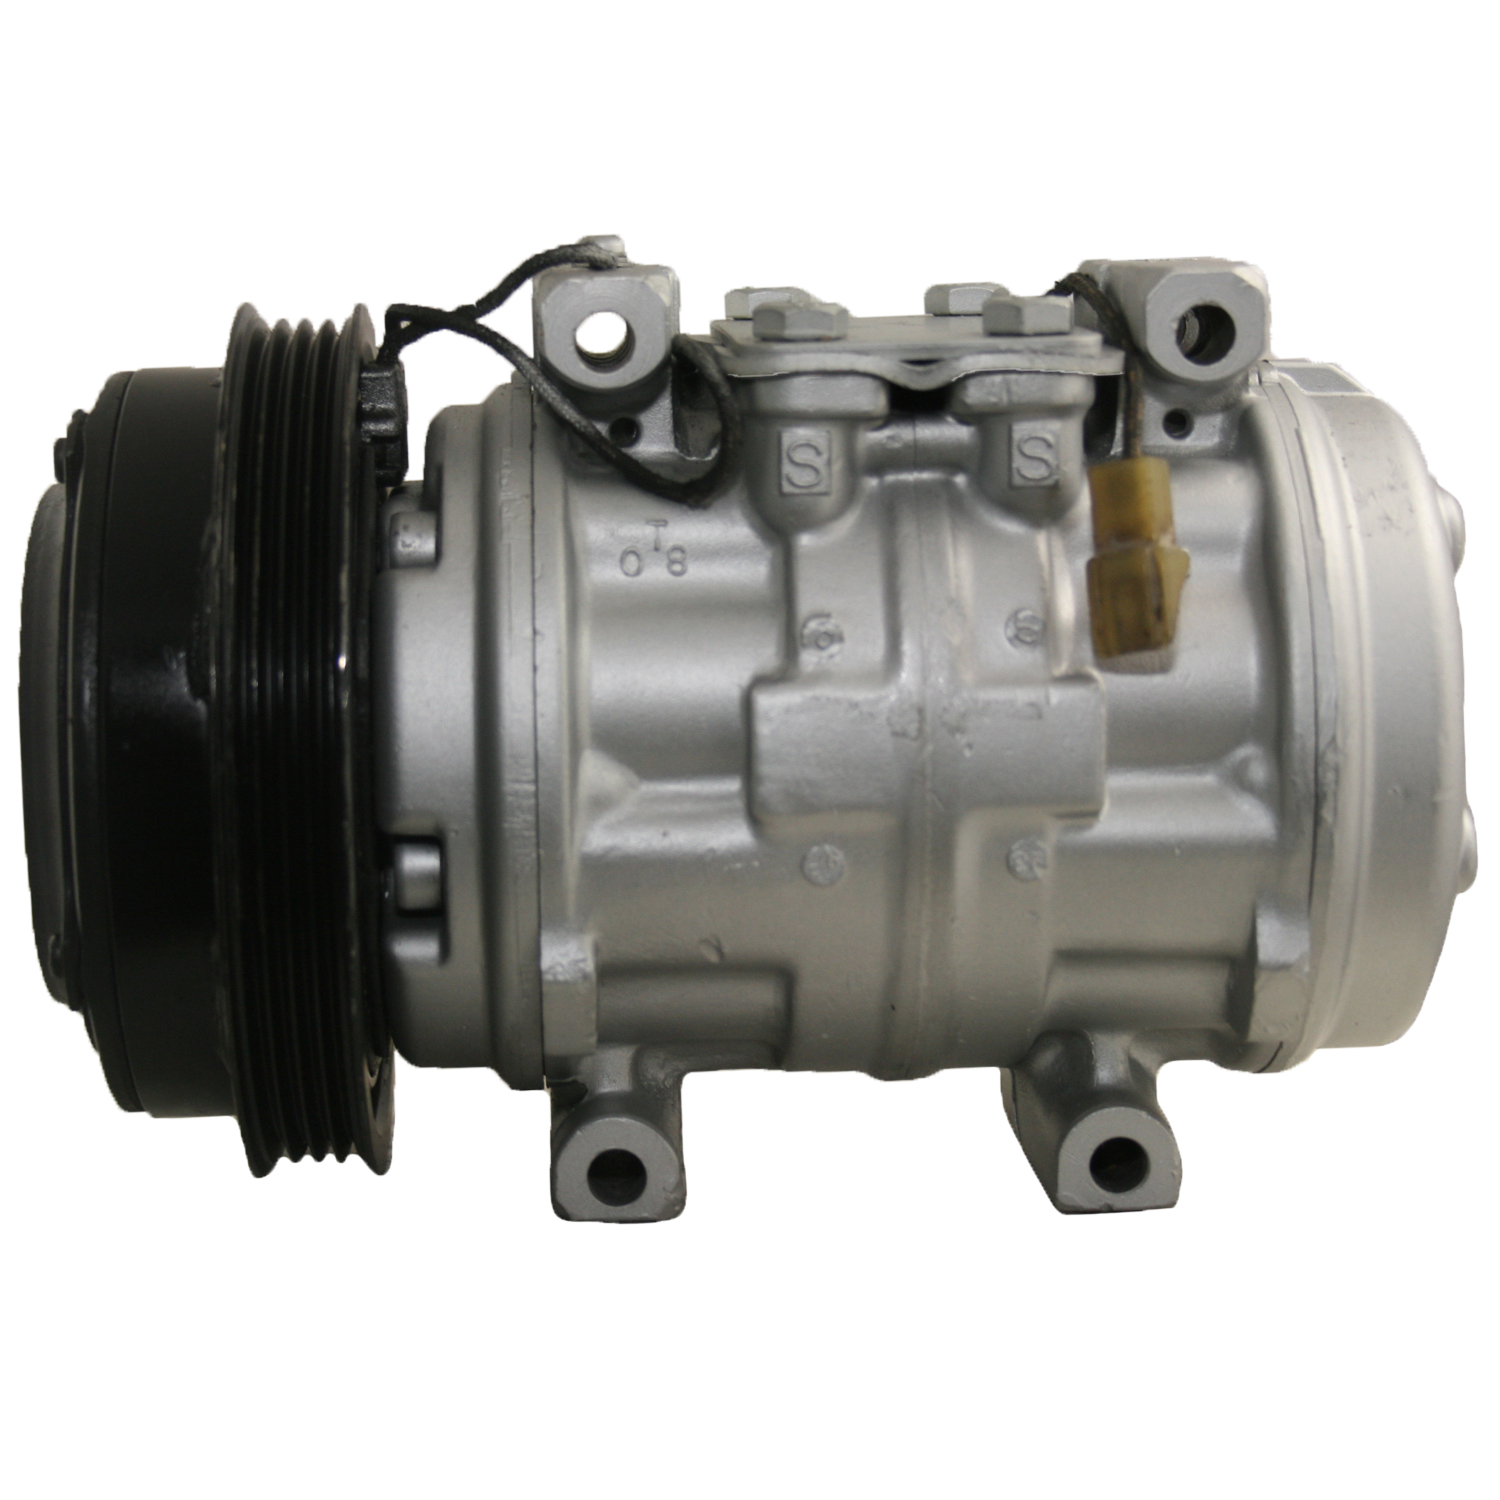 TCW Compressor 31106.401 Remanufactured